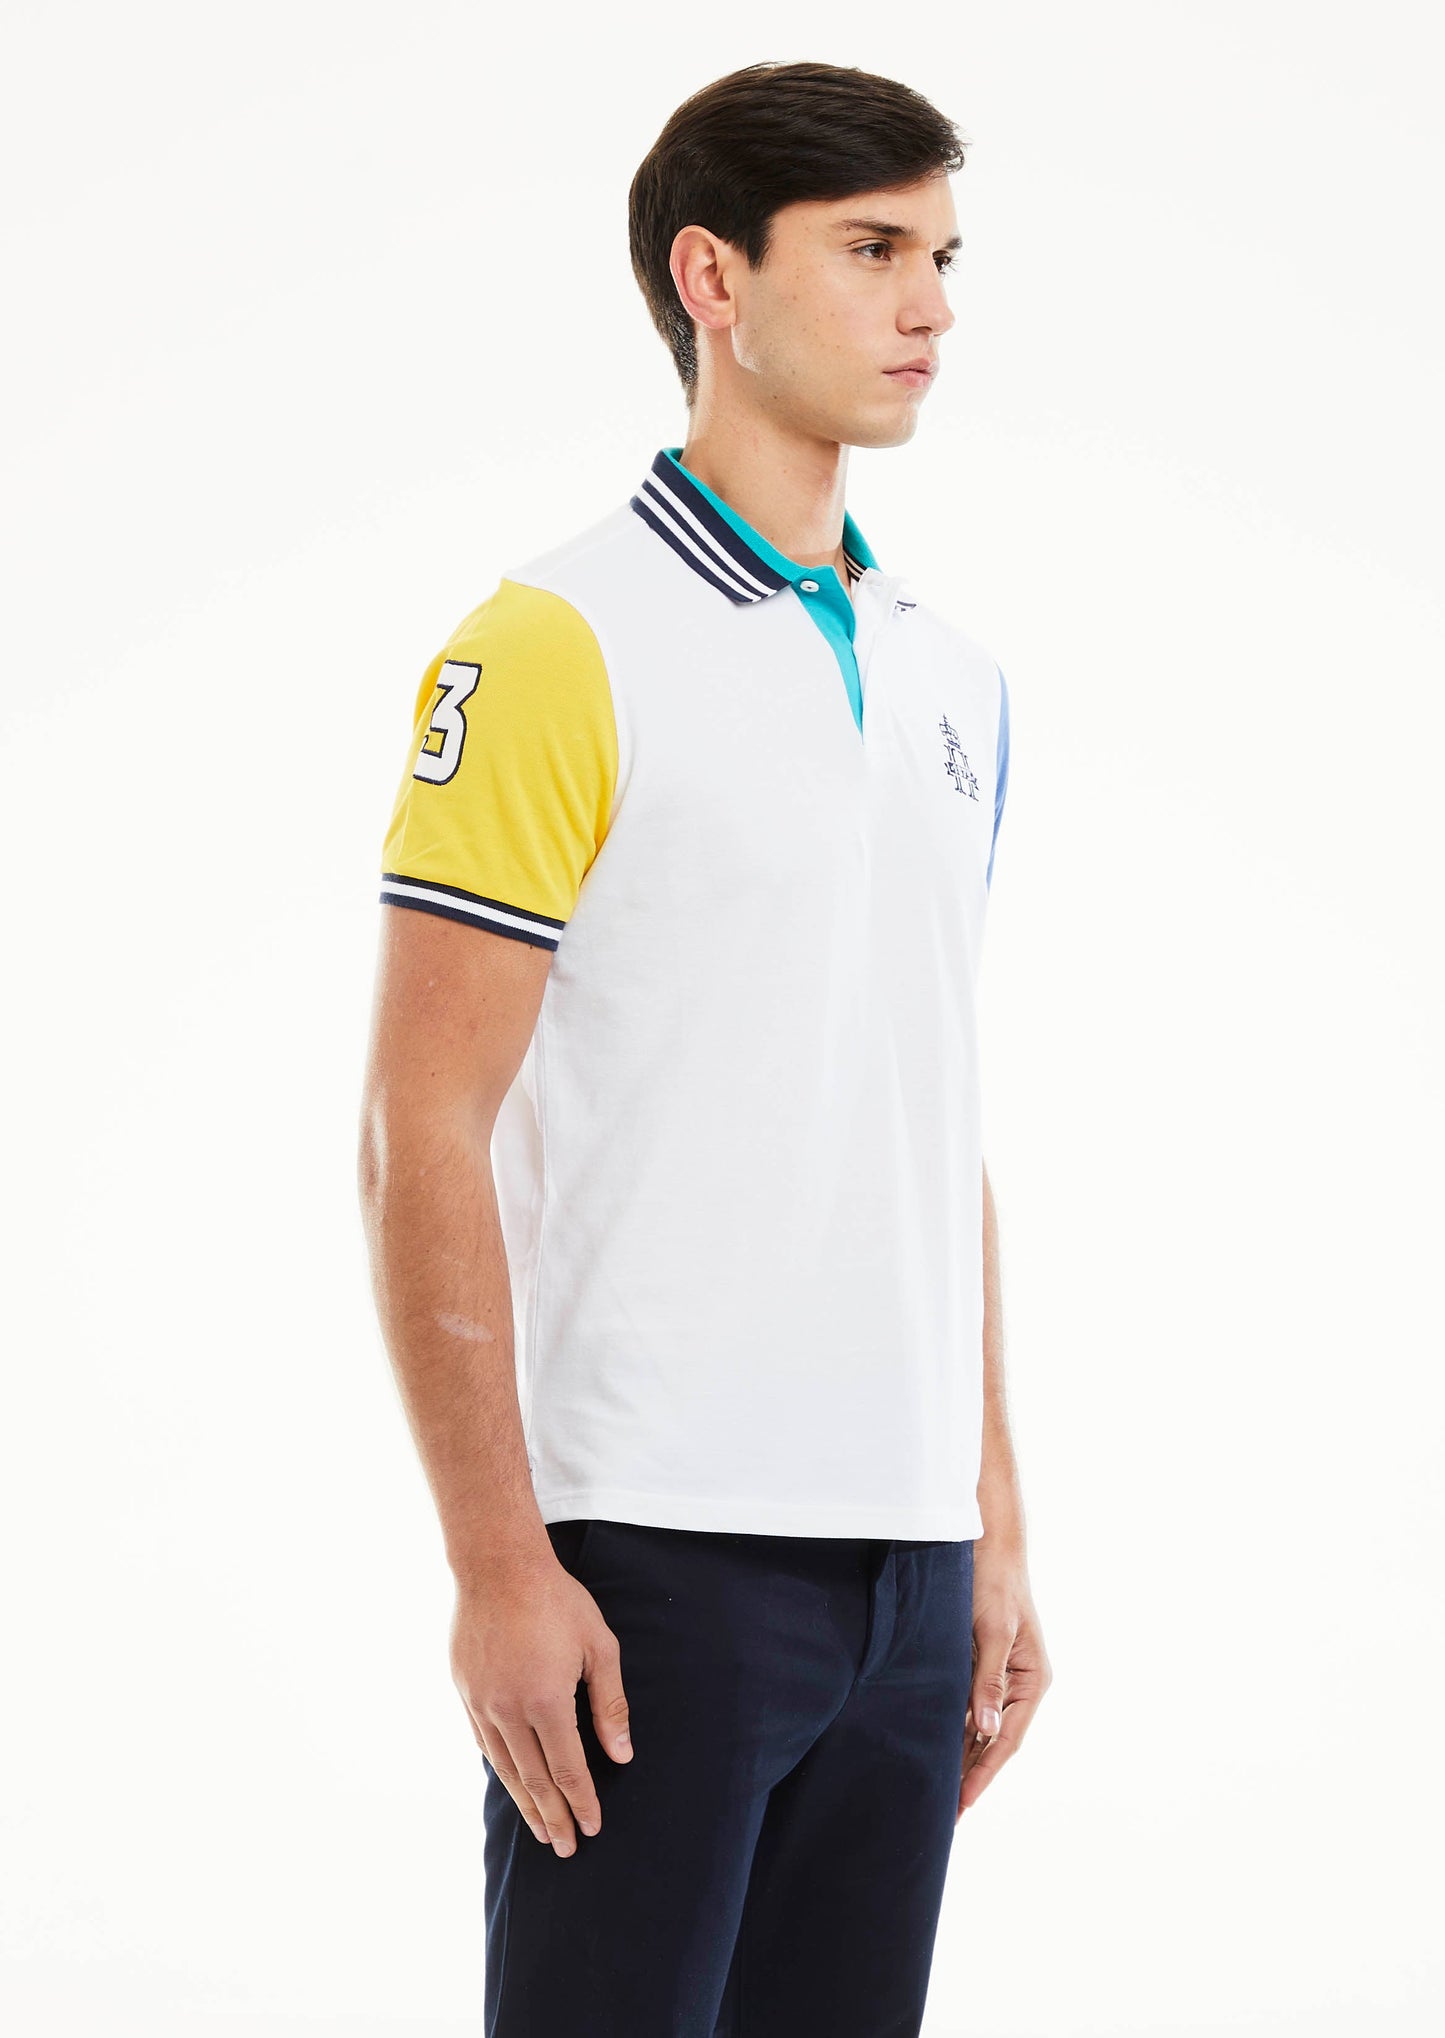 Contrast Sleeve Polo Shirt - White Multi